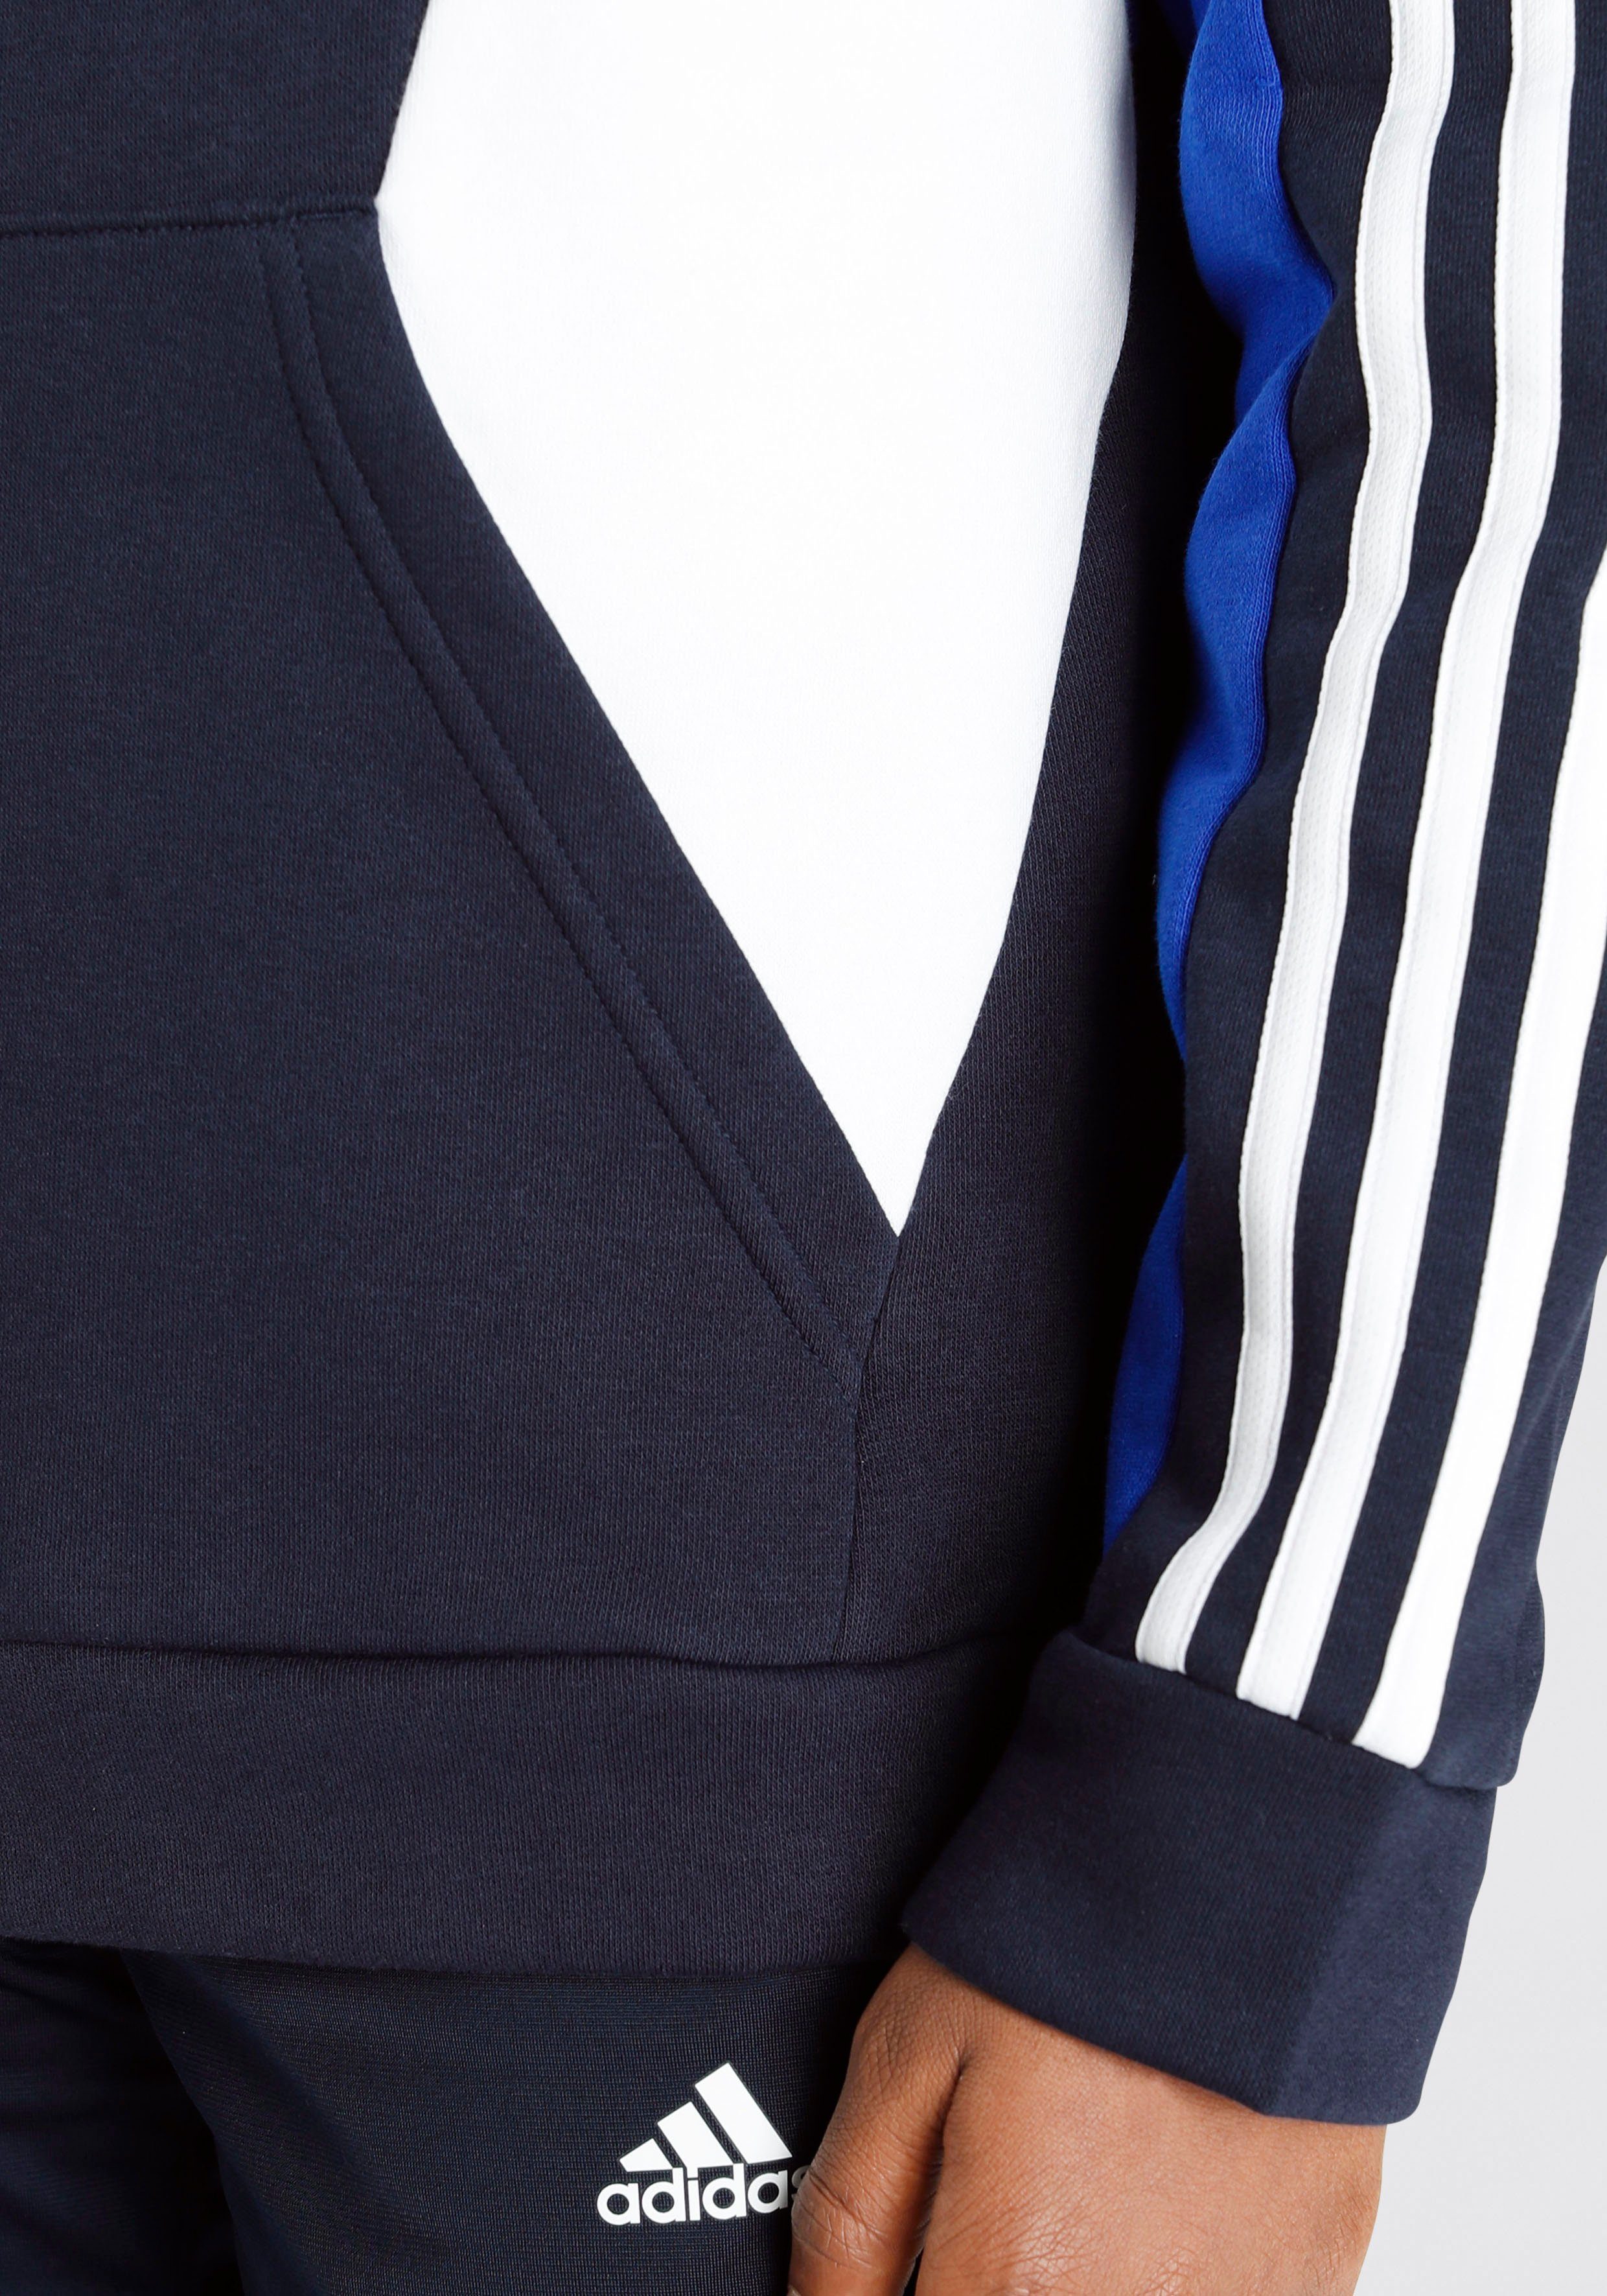 Ink Blue Lucid / Sweatshirt White COLORBLOCK / 3STREIFEN Semi Sportswear HOODIE Legend adidas